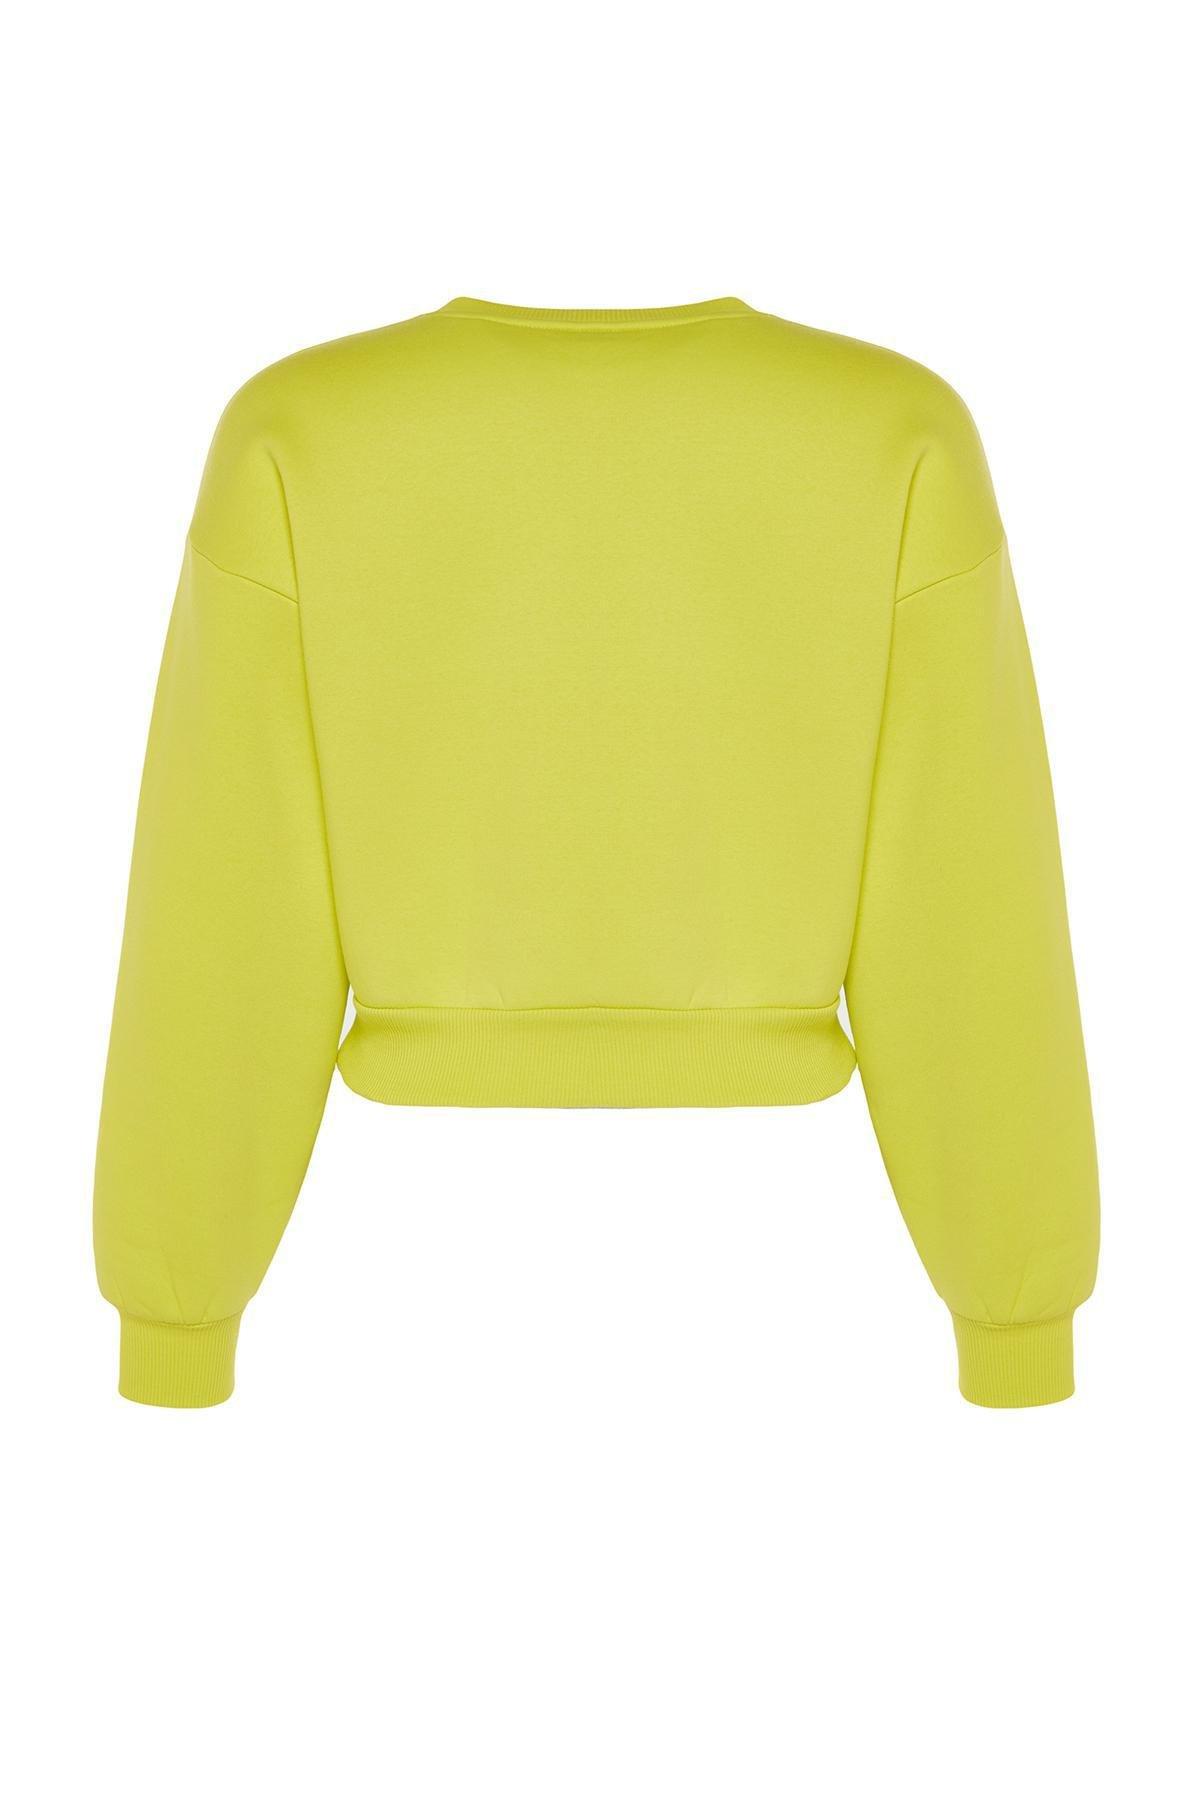 Trendyol - Yellow Fleece Inside Knitted Sweatshirt